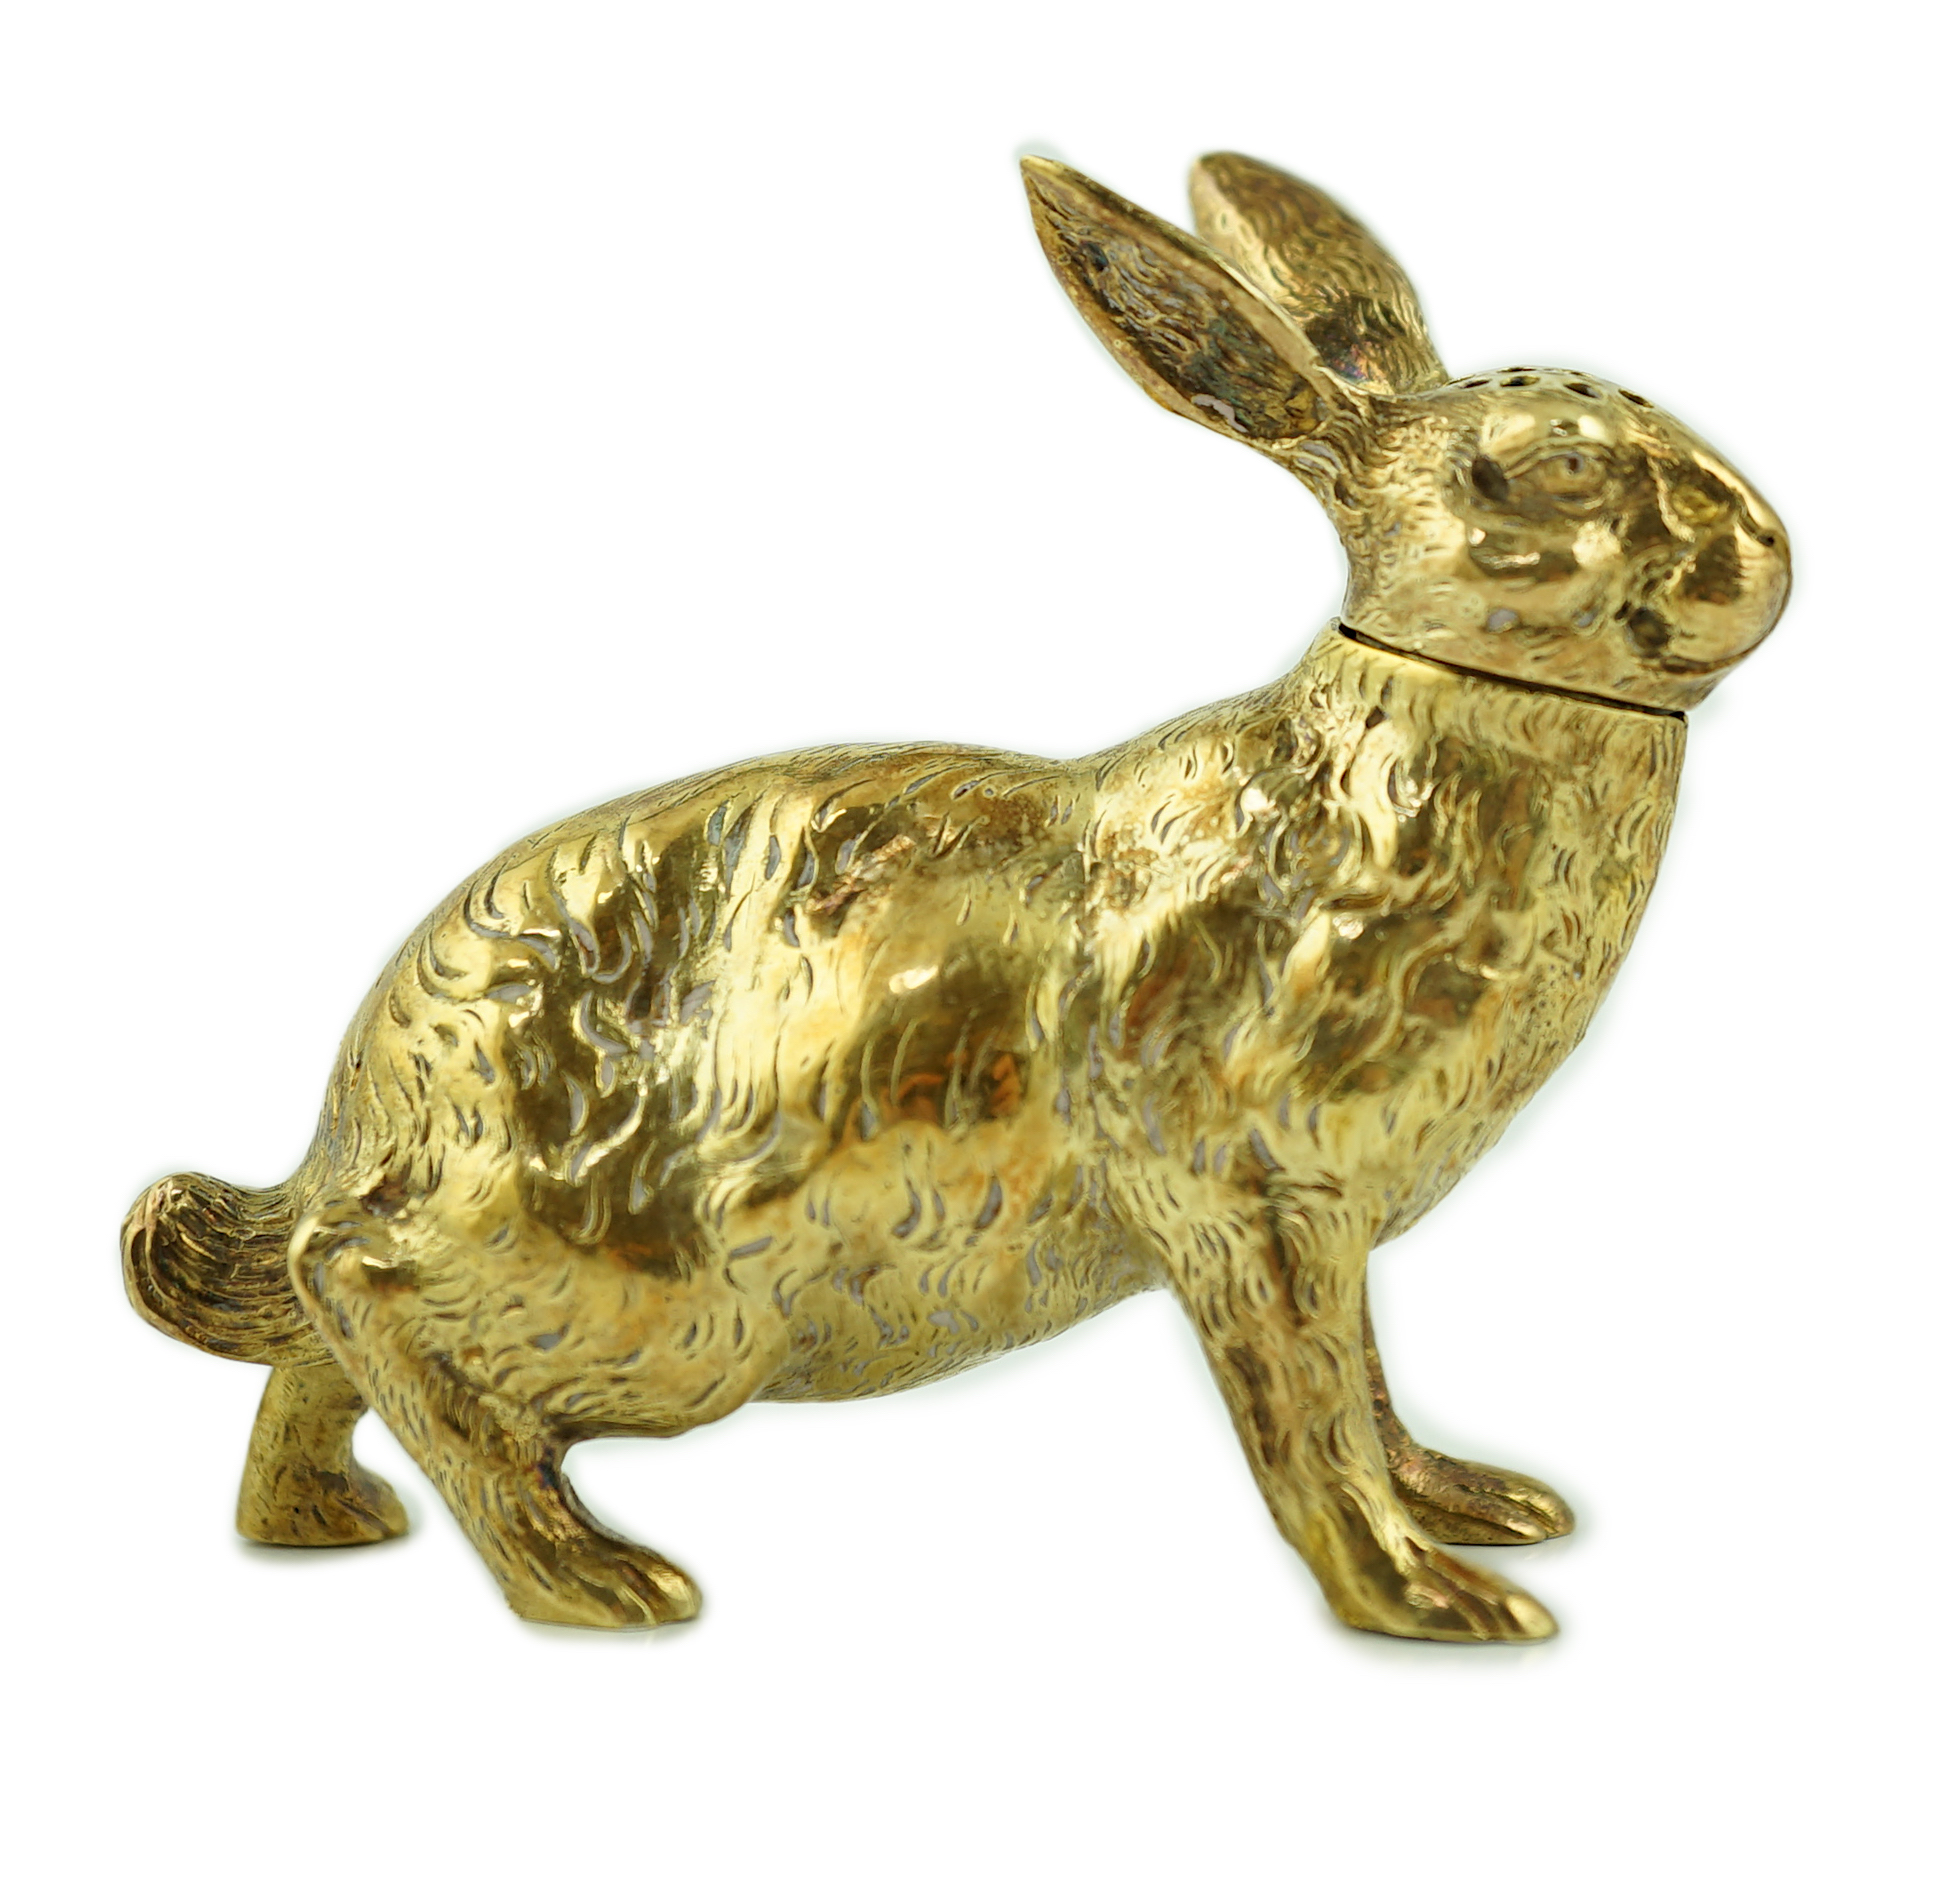 An early 20th century German novelty 800 standard silver gilt pepperette, modelled as a rabbit